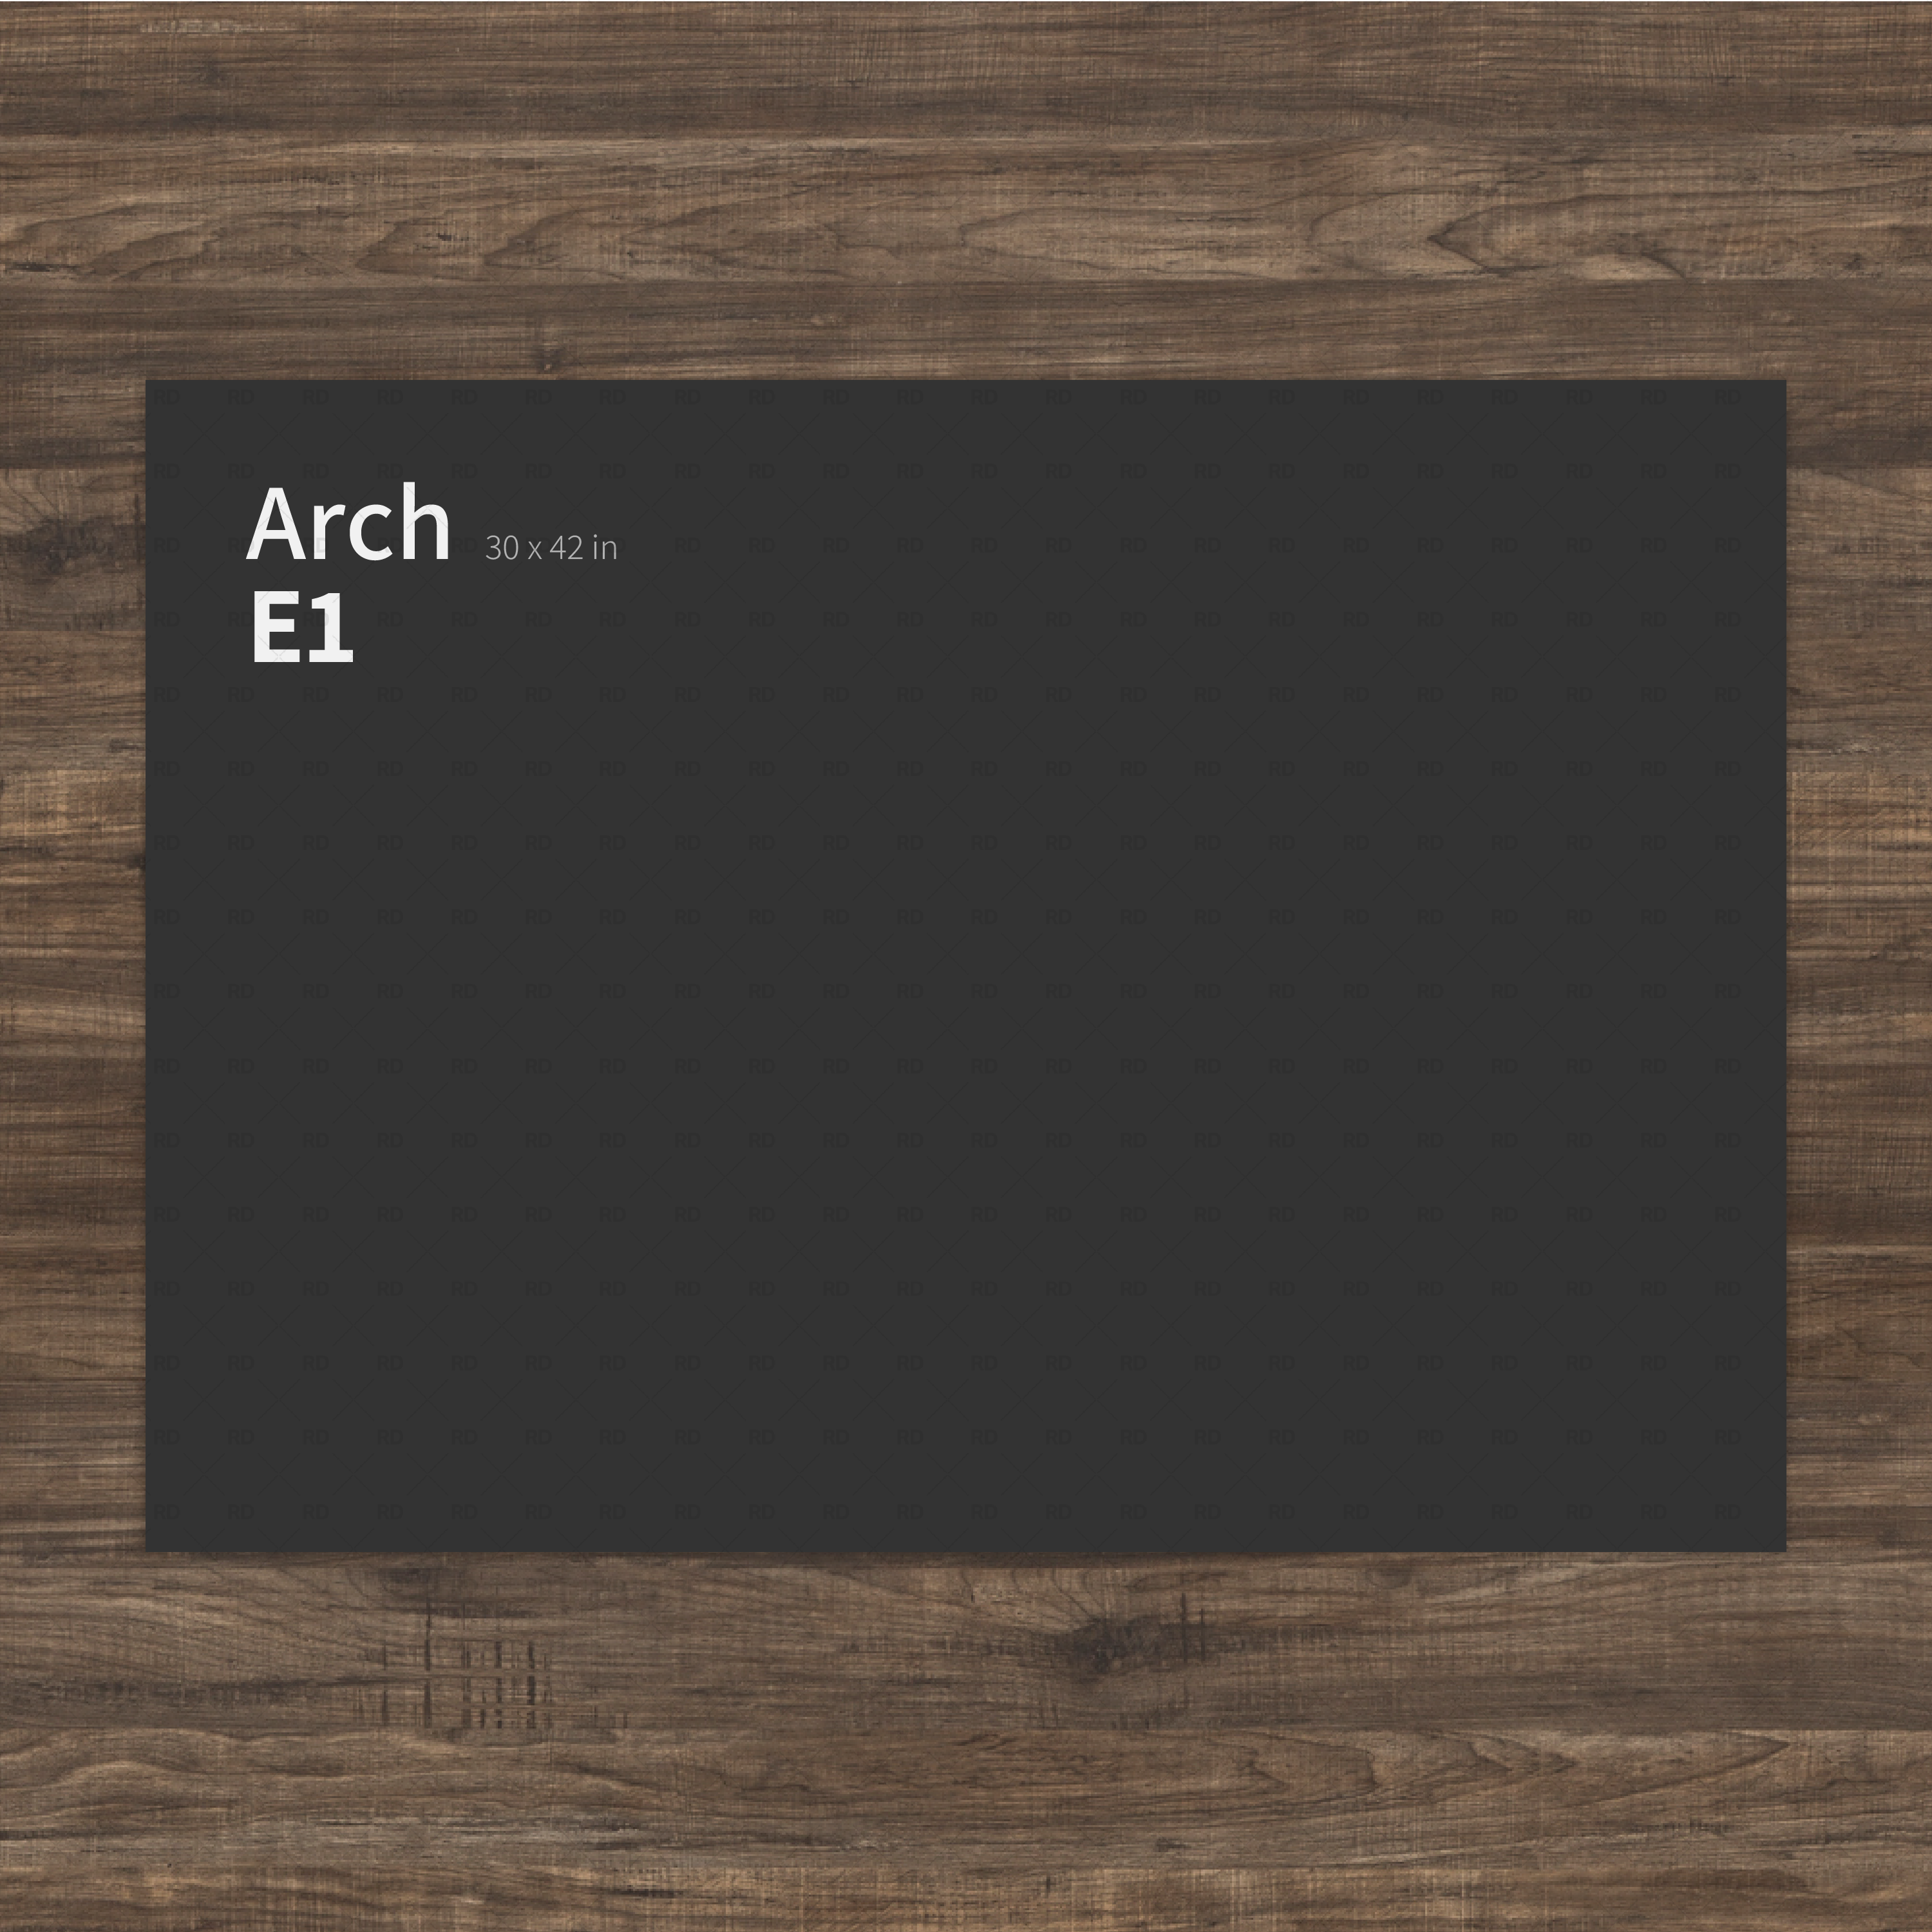 arch E1 parametric title block